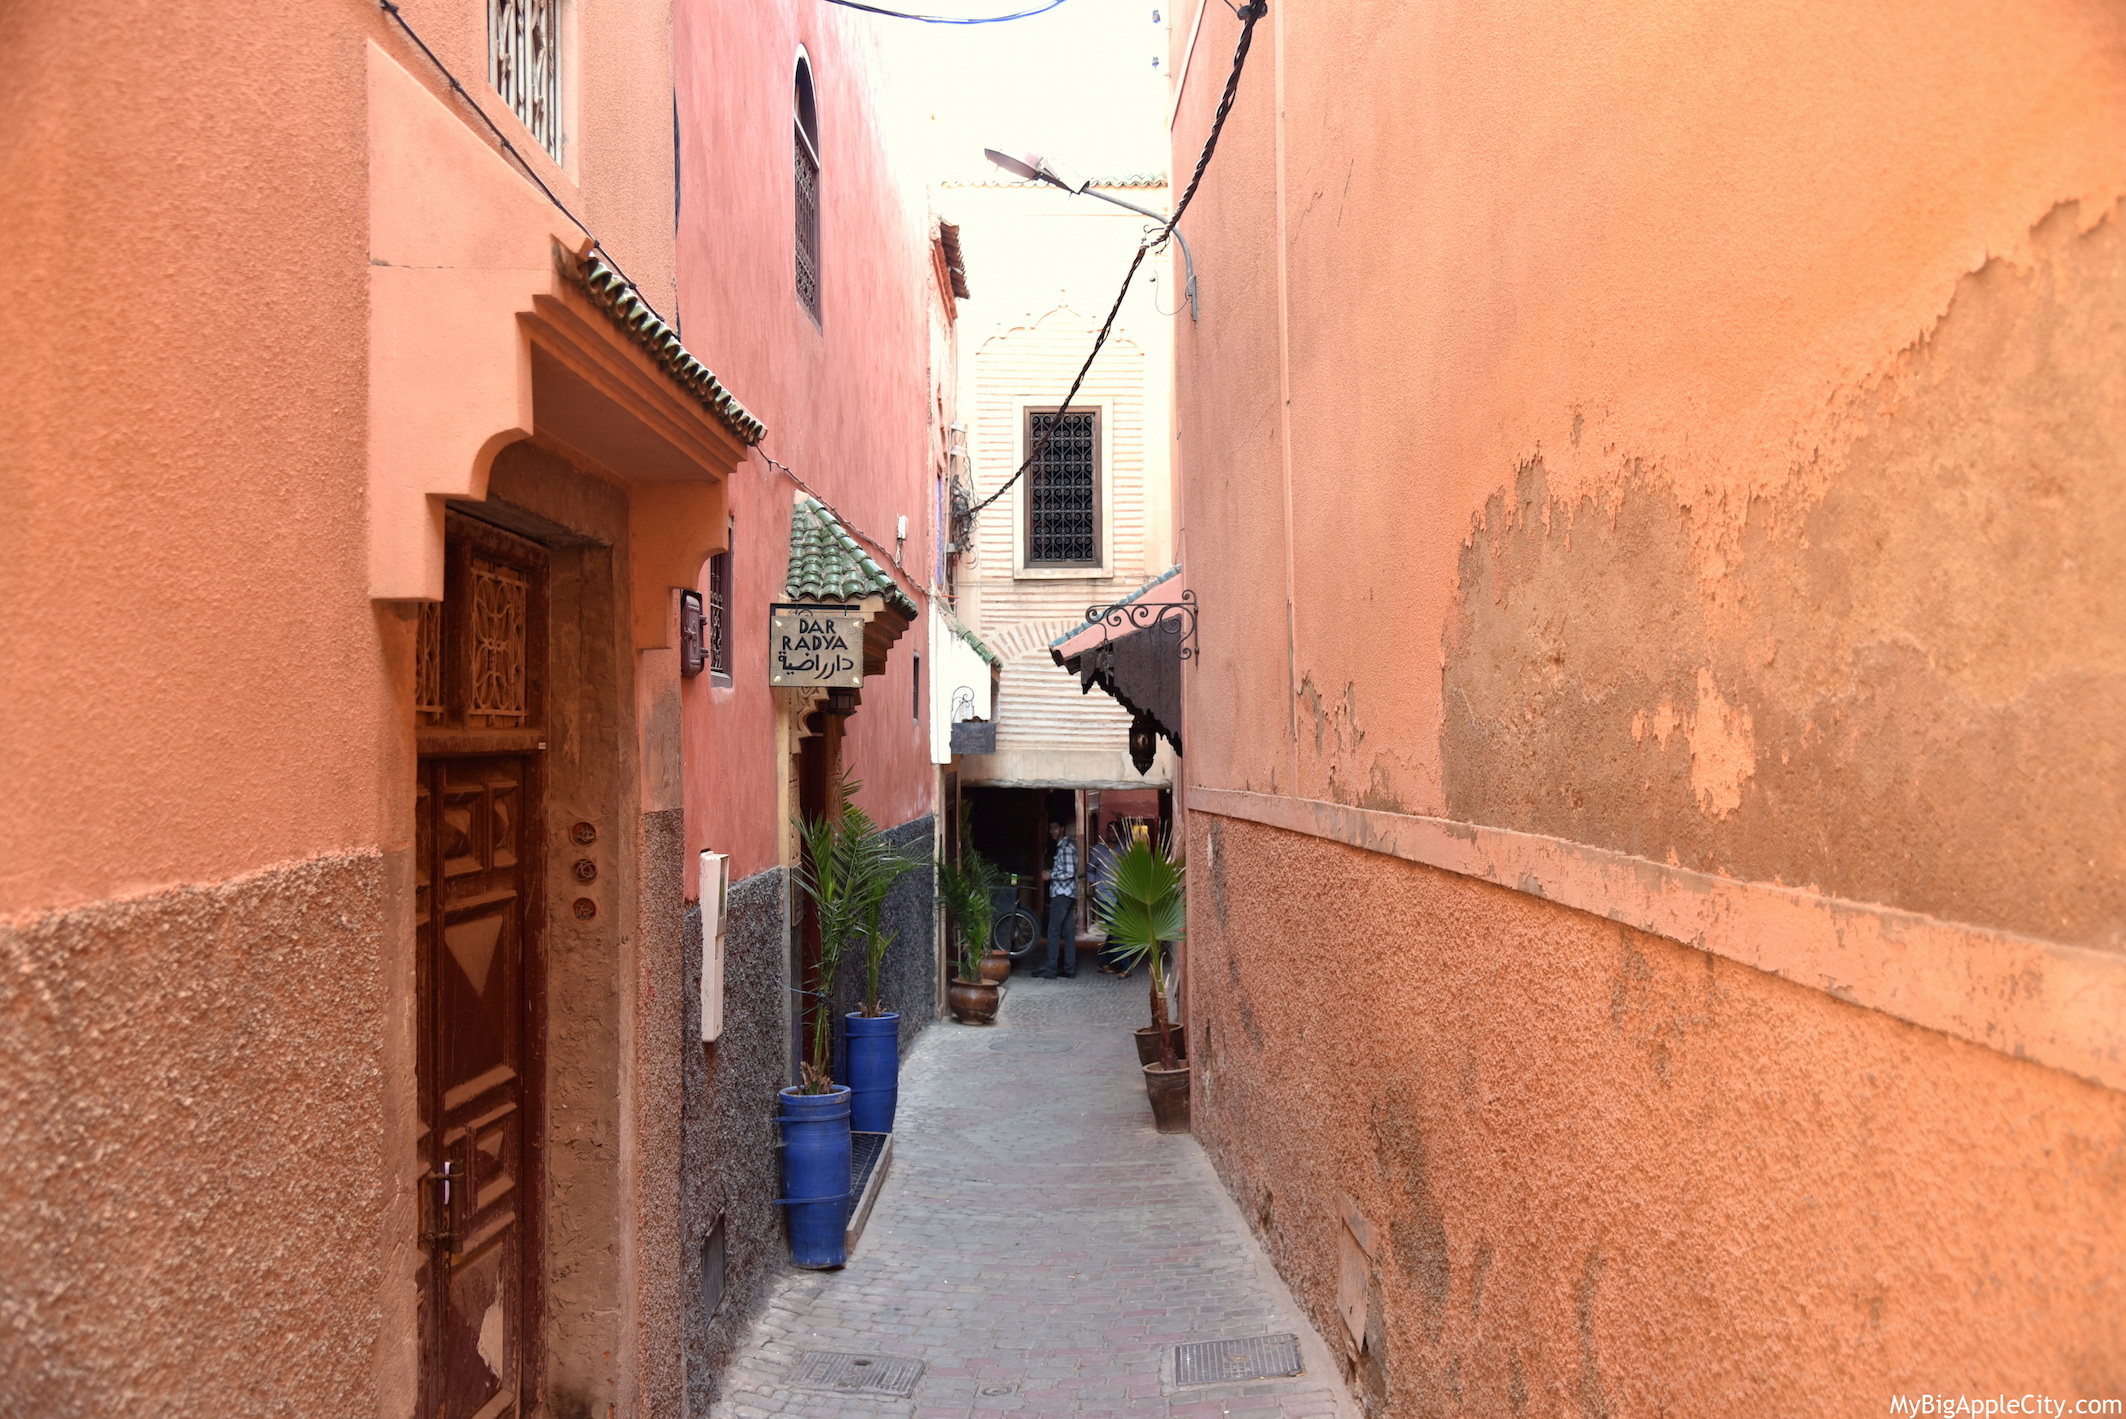 Inside-Medina-Marrakech-Travel-Blog-2016-MyBigAppleCity